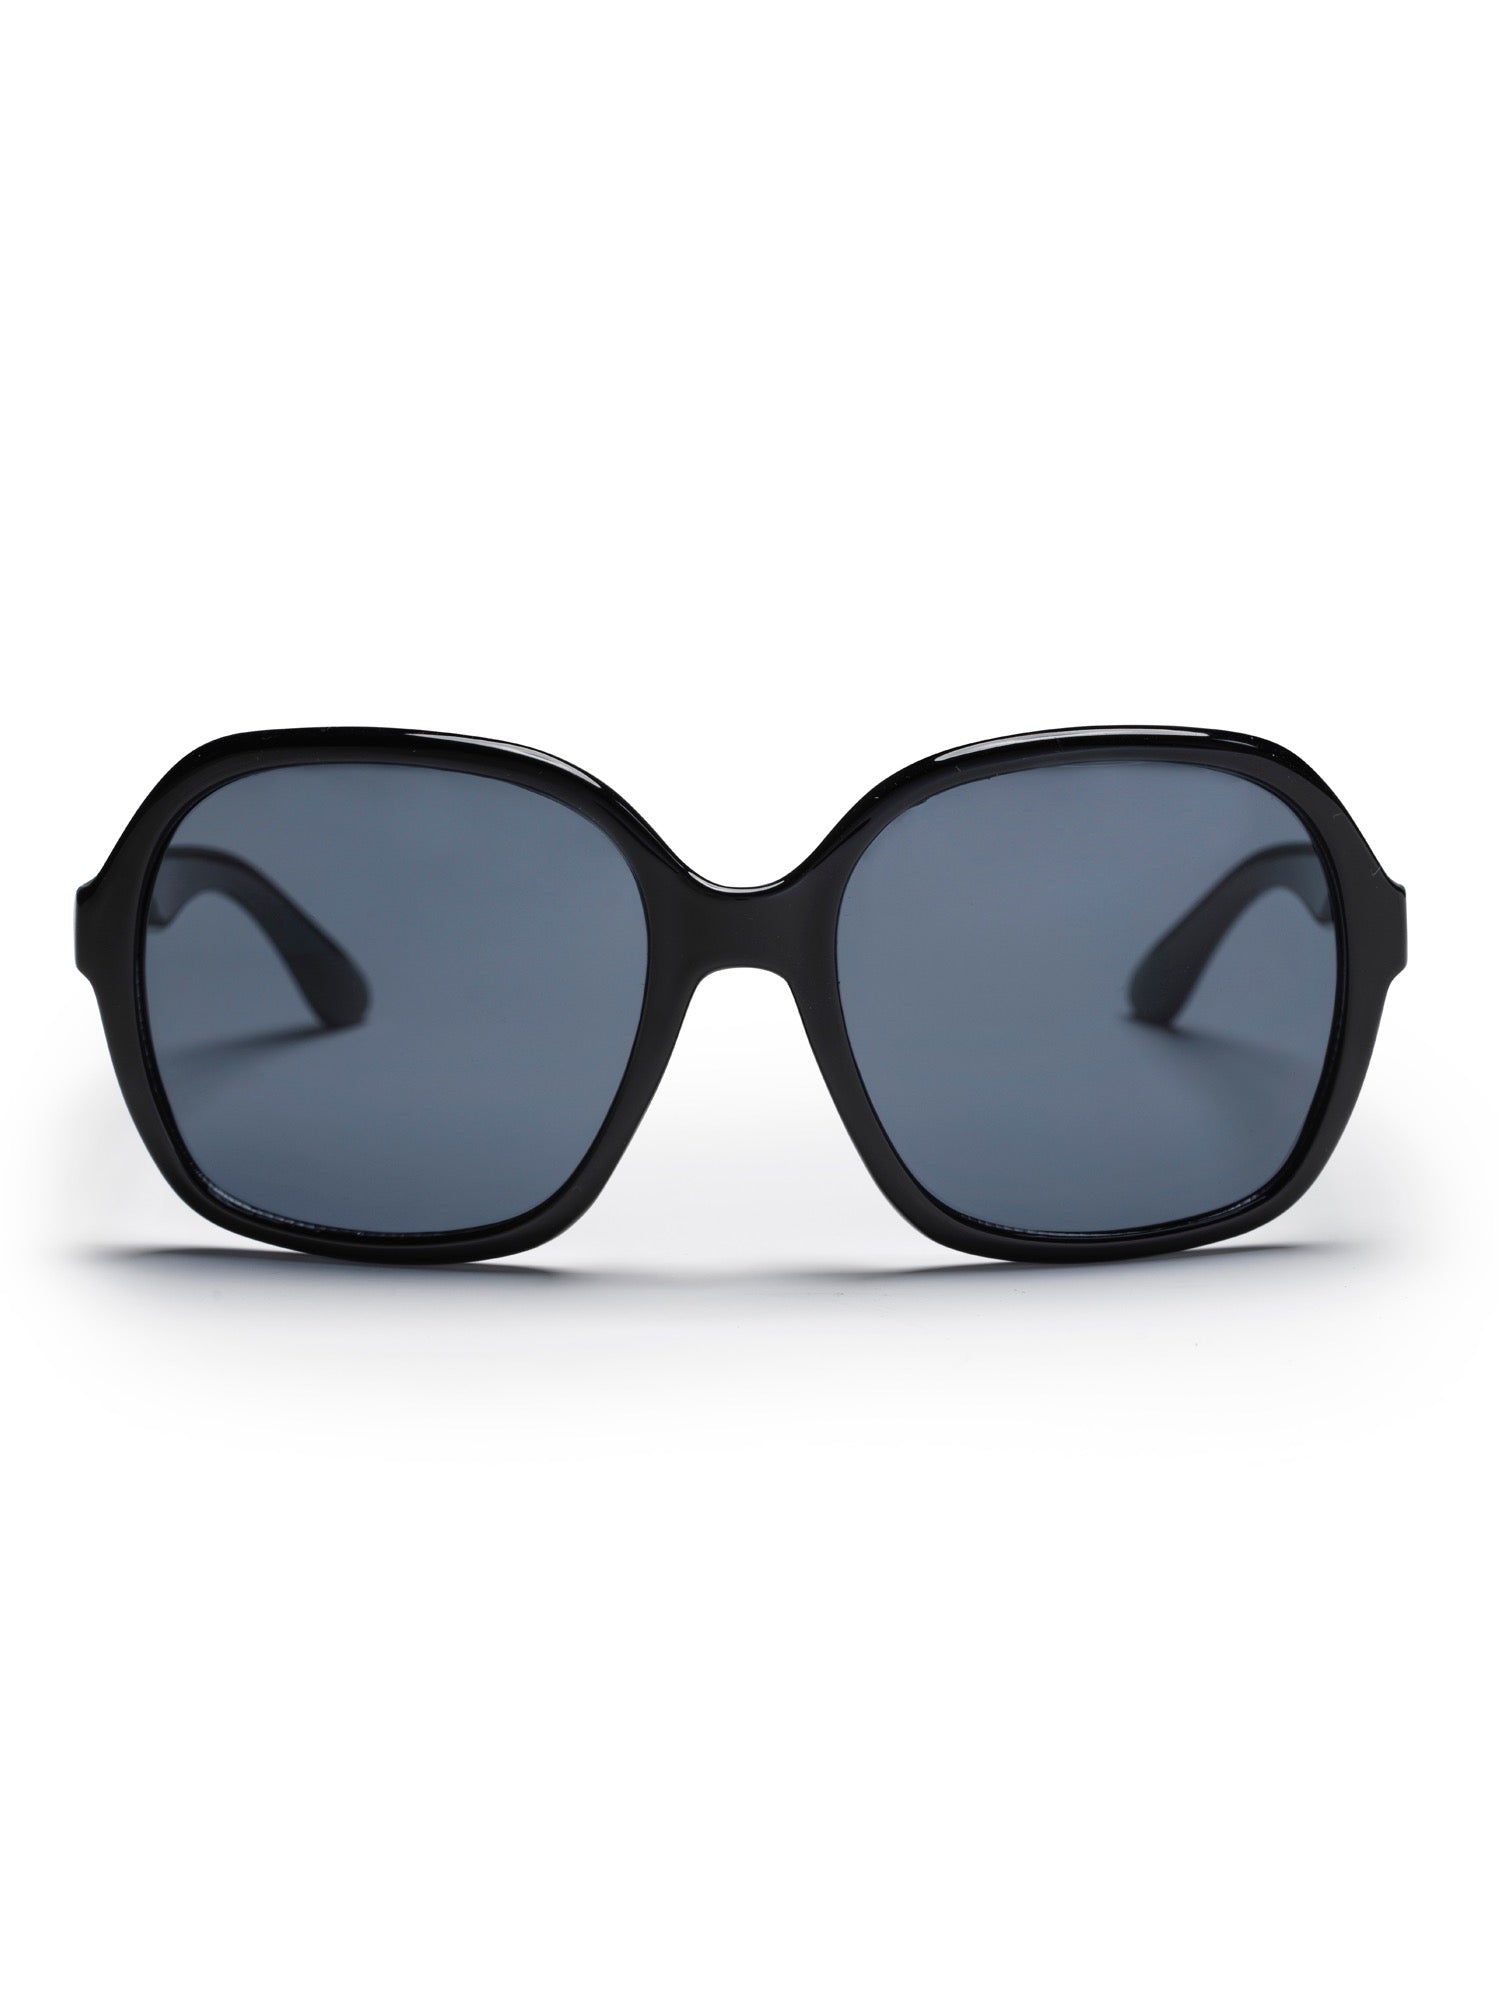 CHPO Gucc Sunglasses - Recycled Plastic Black Black Sunglasses